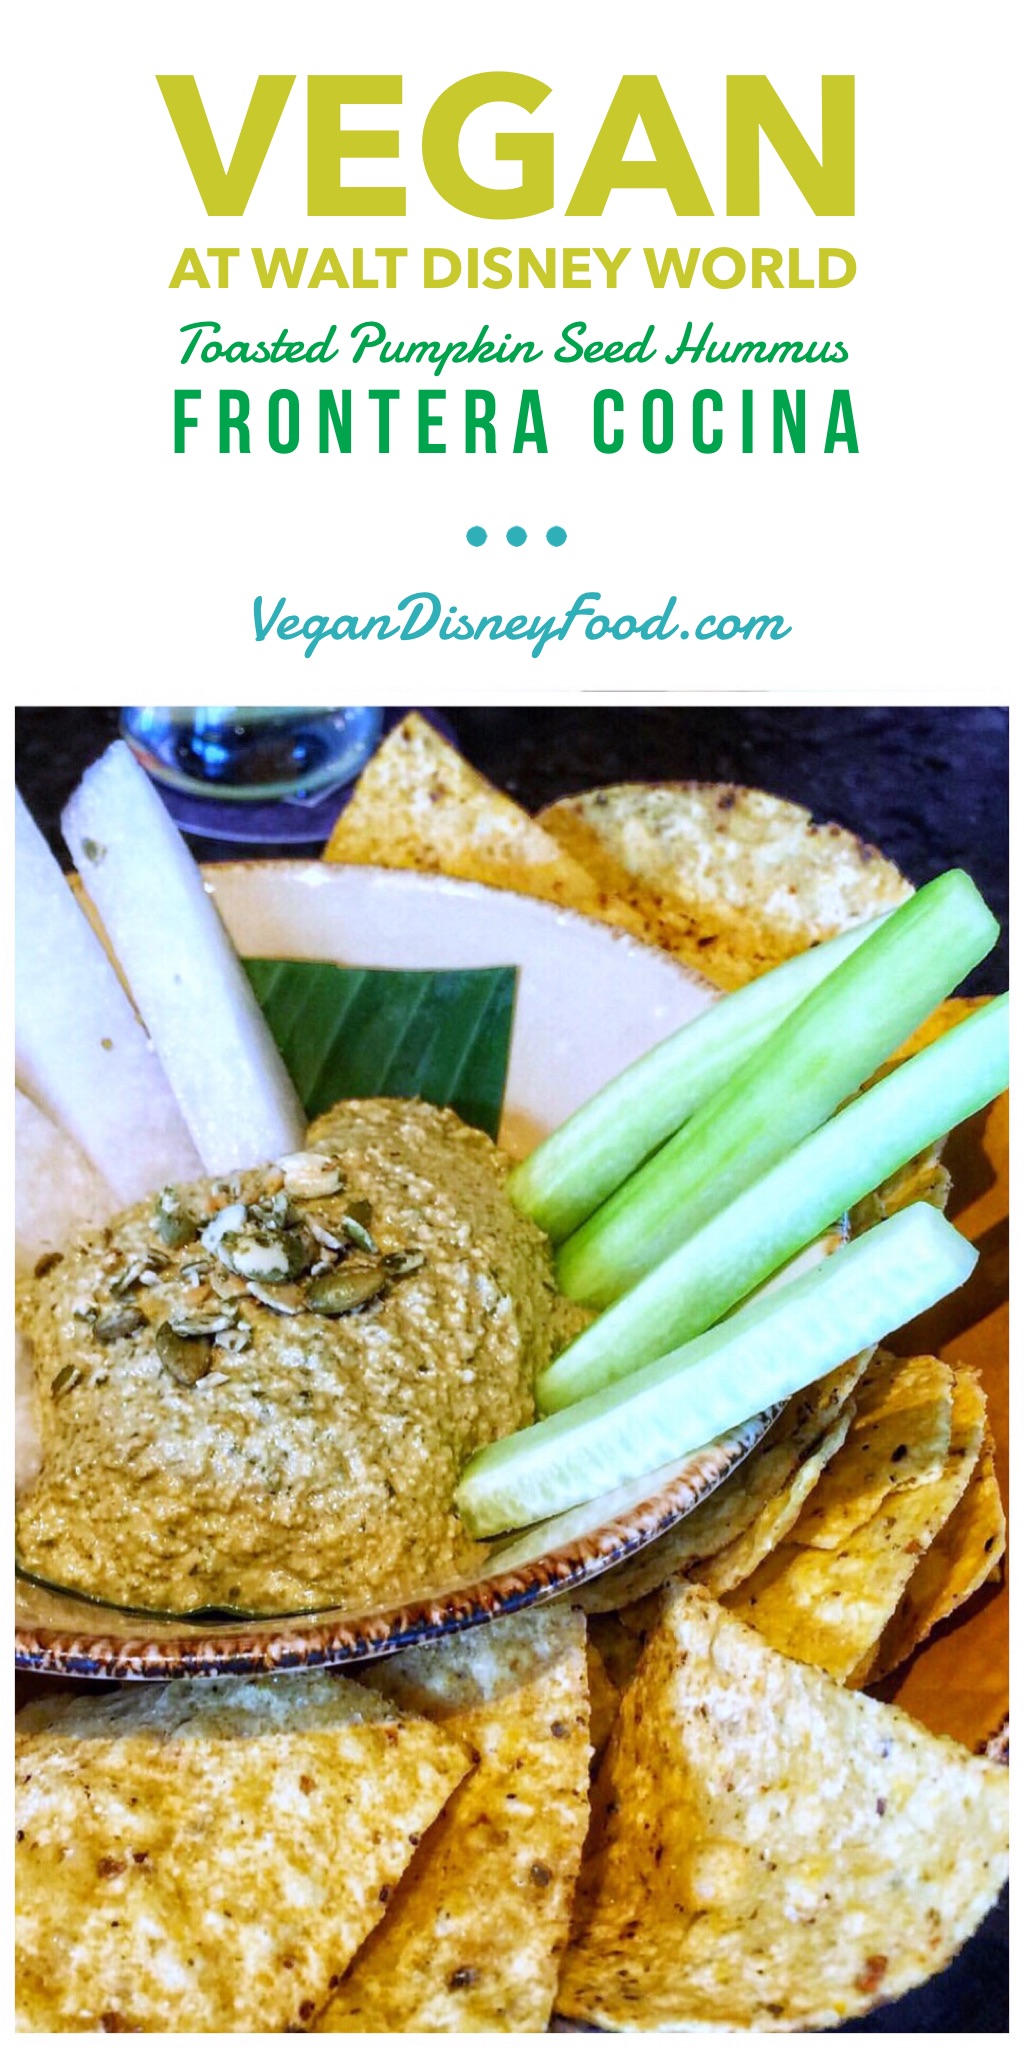 Vegan at Walt Disney World - Toasted Pumpkin Seed Hummus from Frontera Cocina in Disney Springs